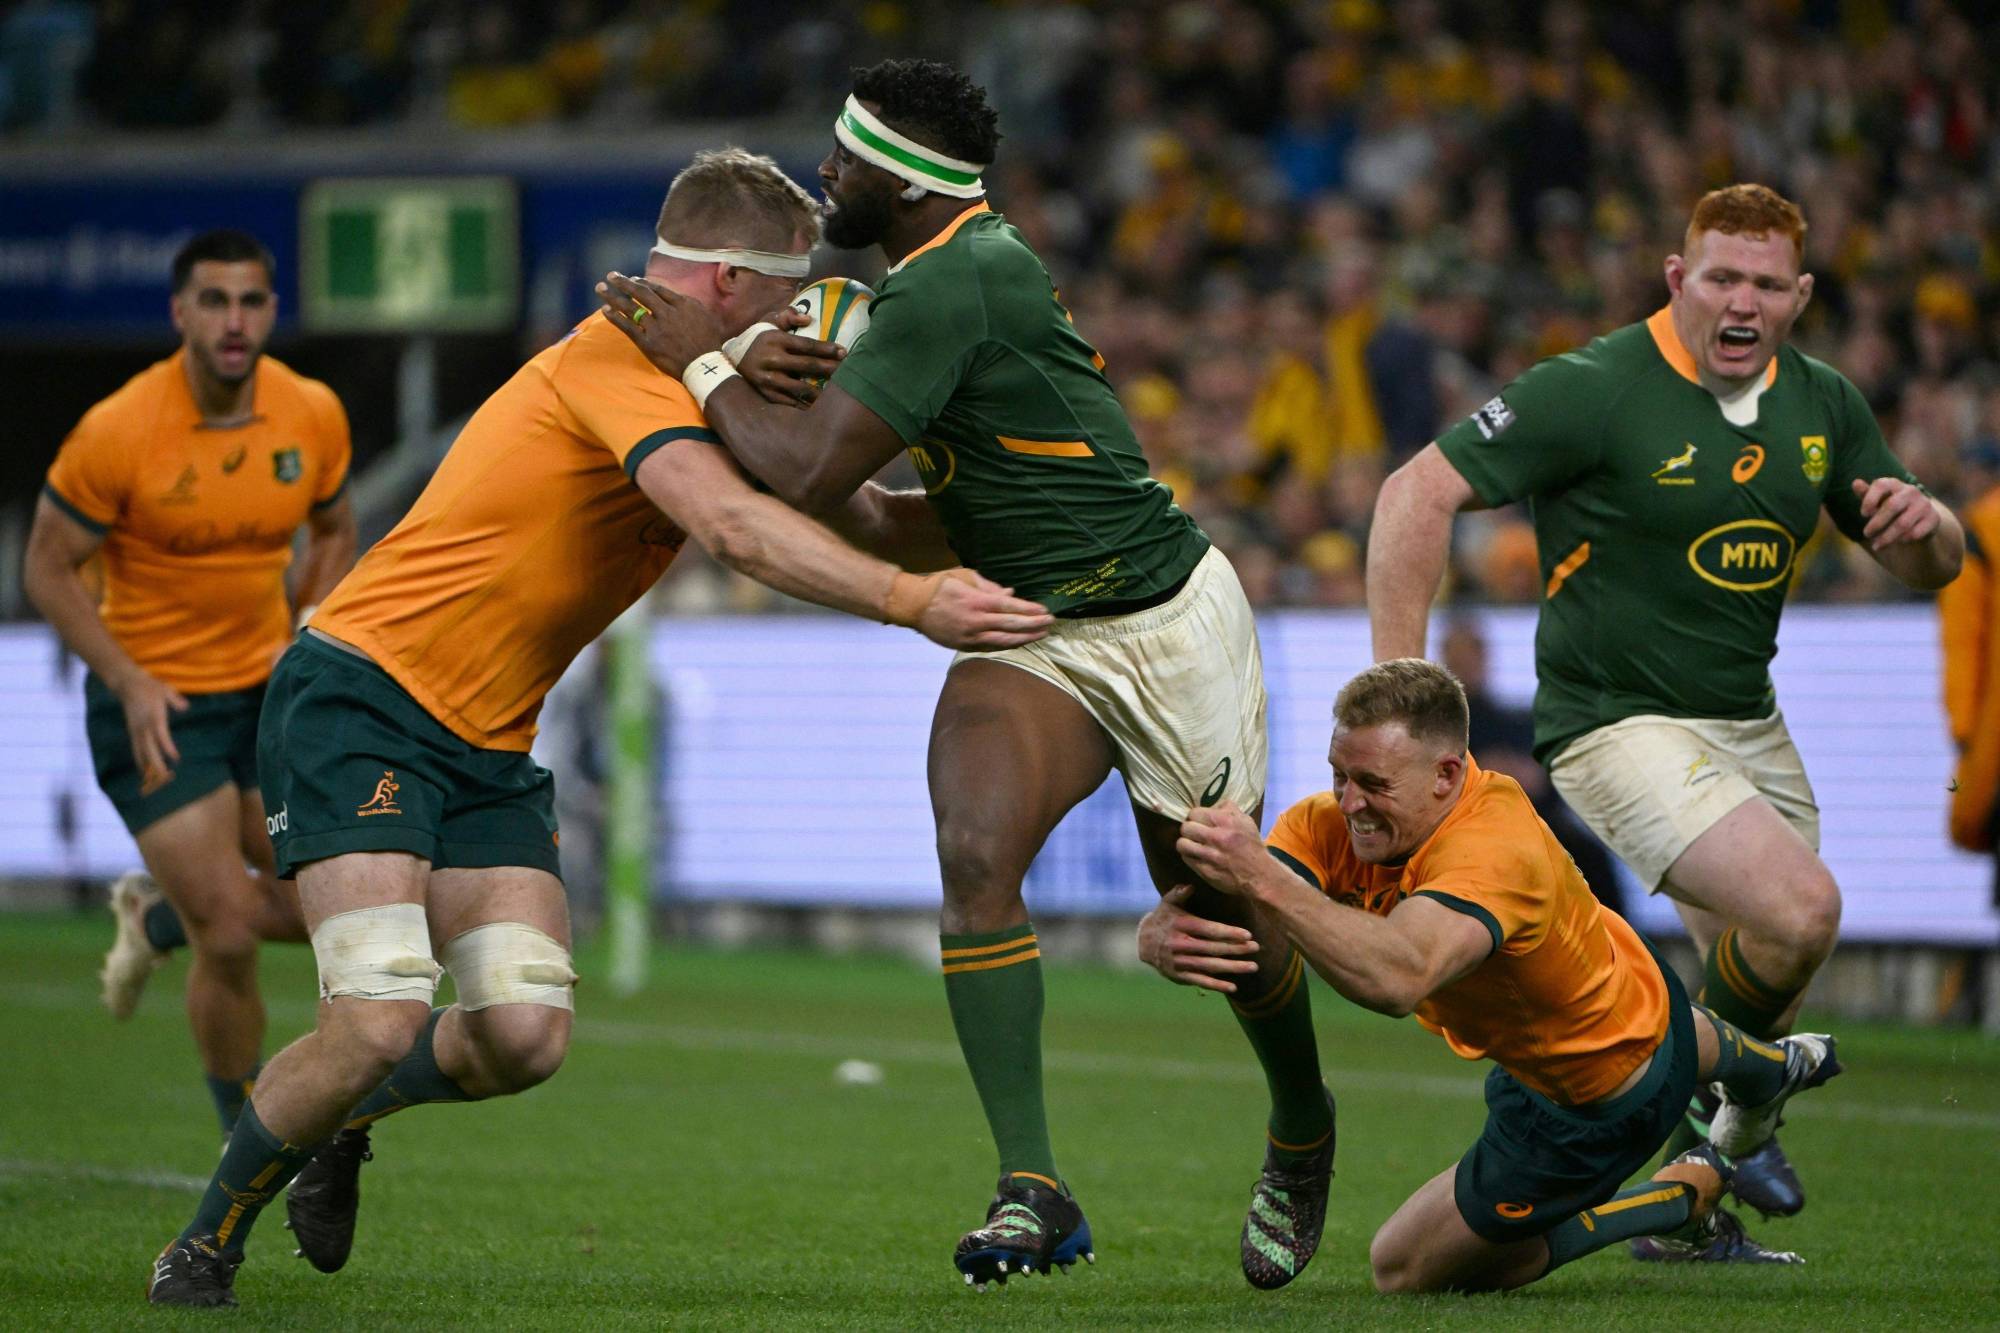 Springboks captain Siya Kolisi hopes to see more consistency as Rugby Championship winds down